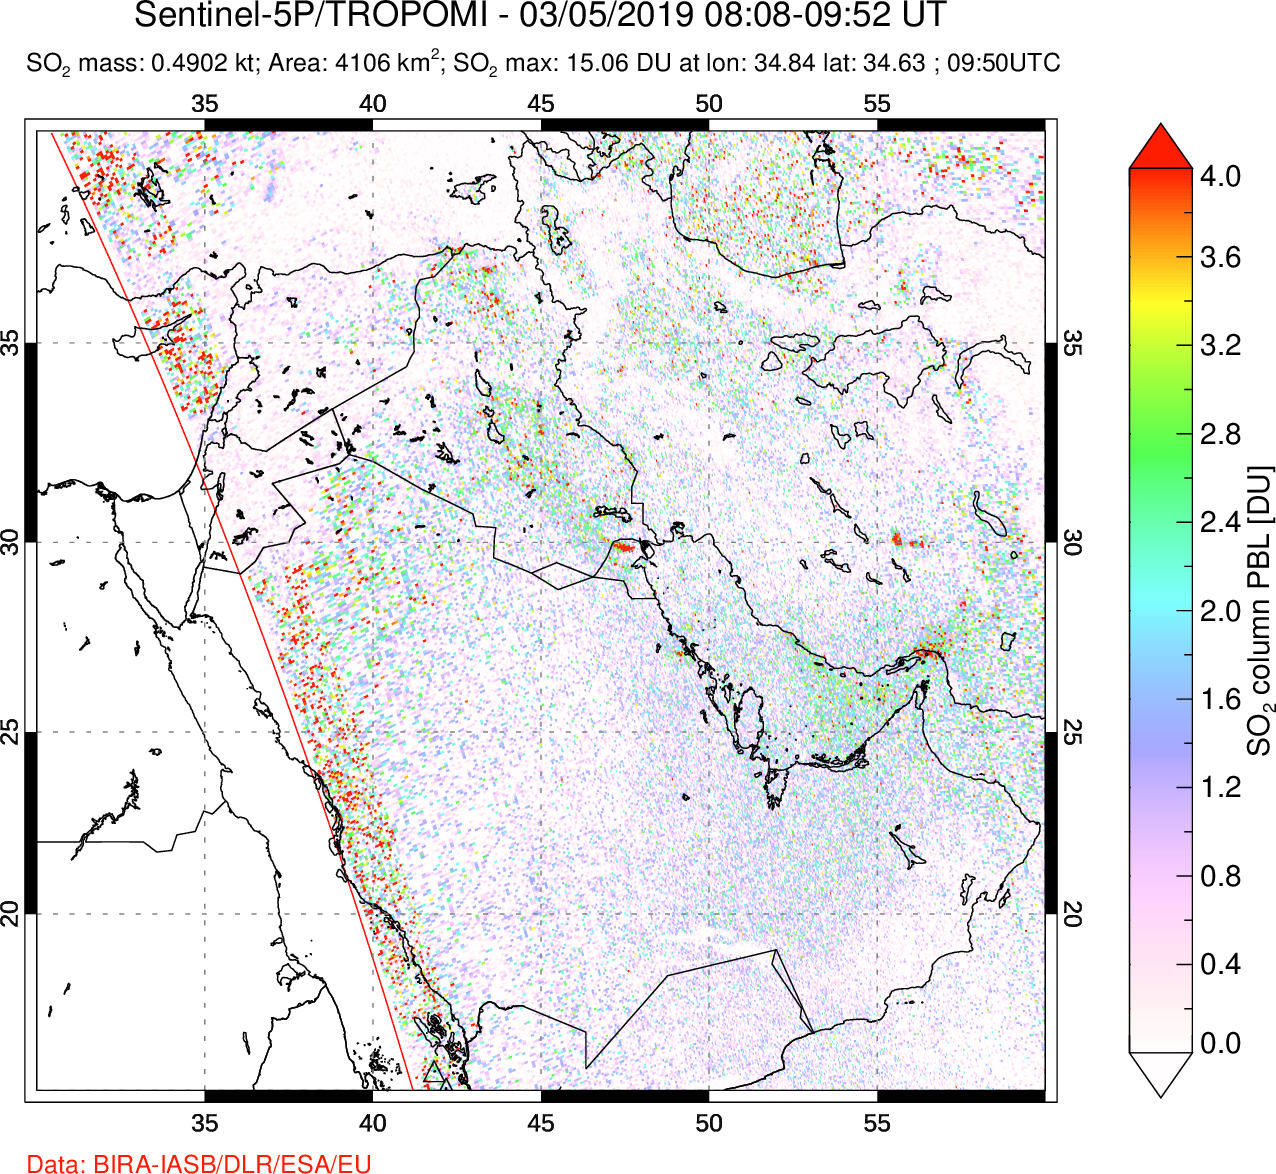 A sulfur dioxide image over Middle East on Mar 05, 2019.